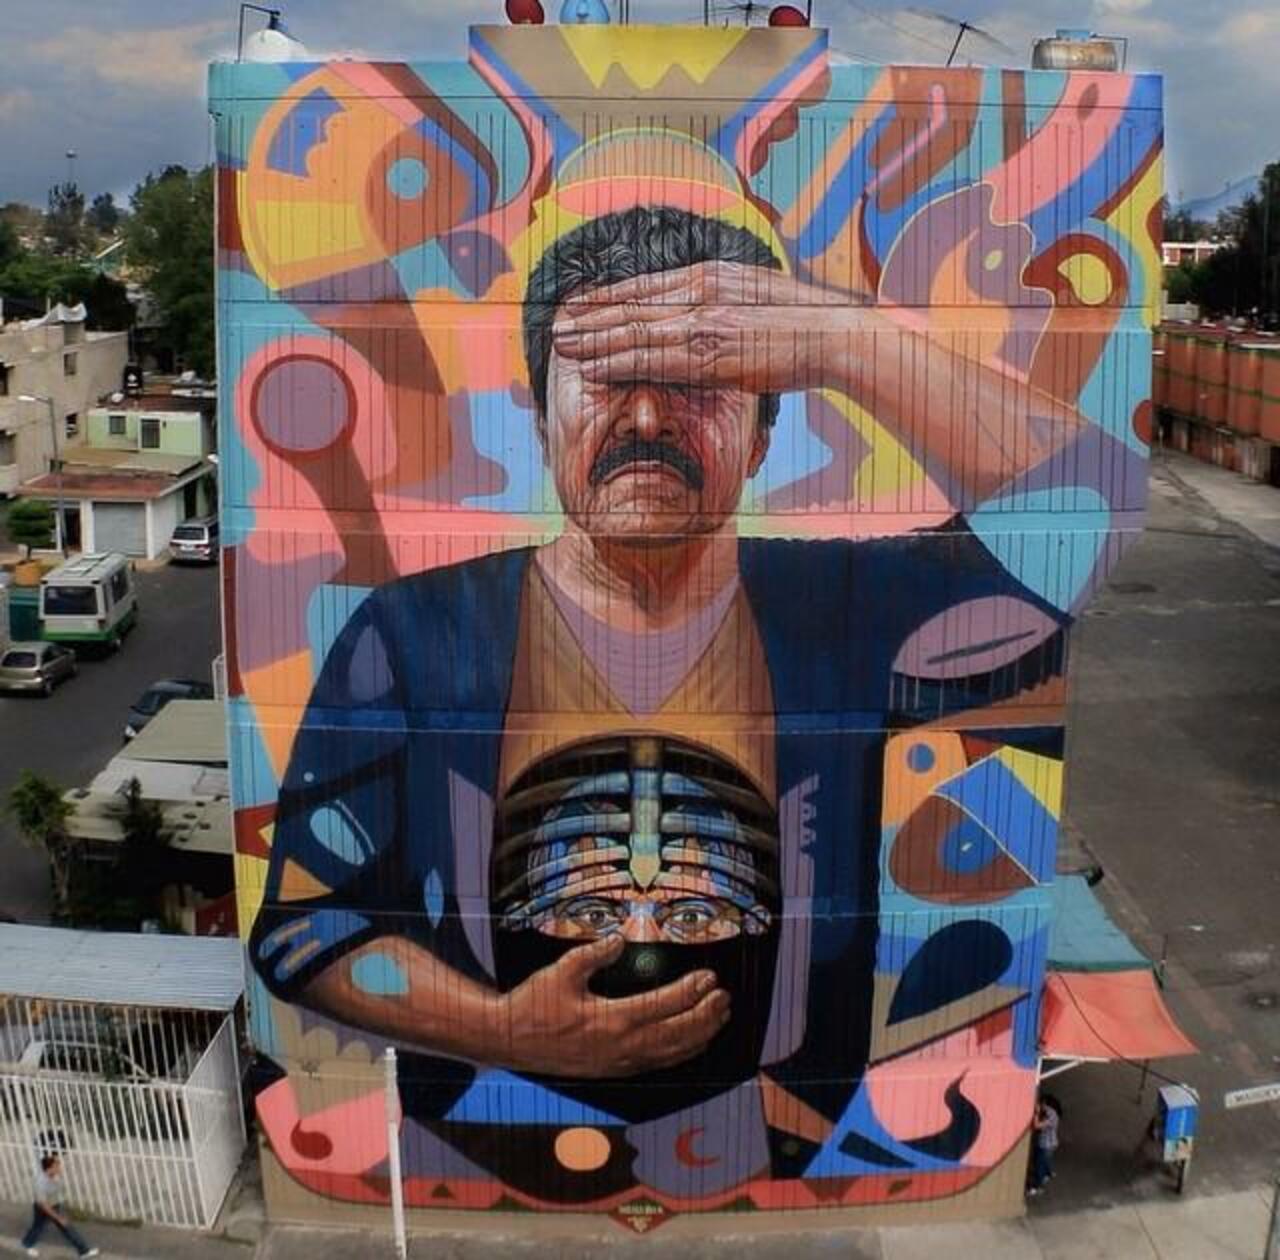 Large scale Street Art by the artist Daniel Cortez 

#art #mural #graffiti #streetart http://t.co/BjAVaEIQRc